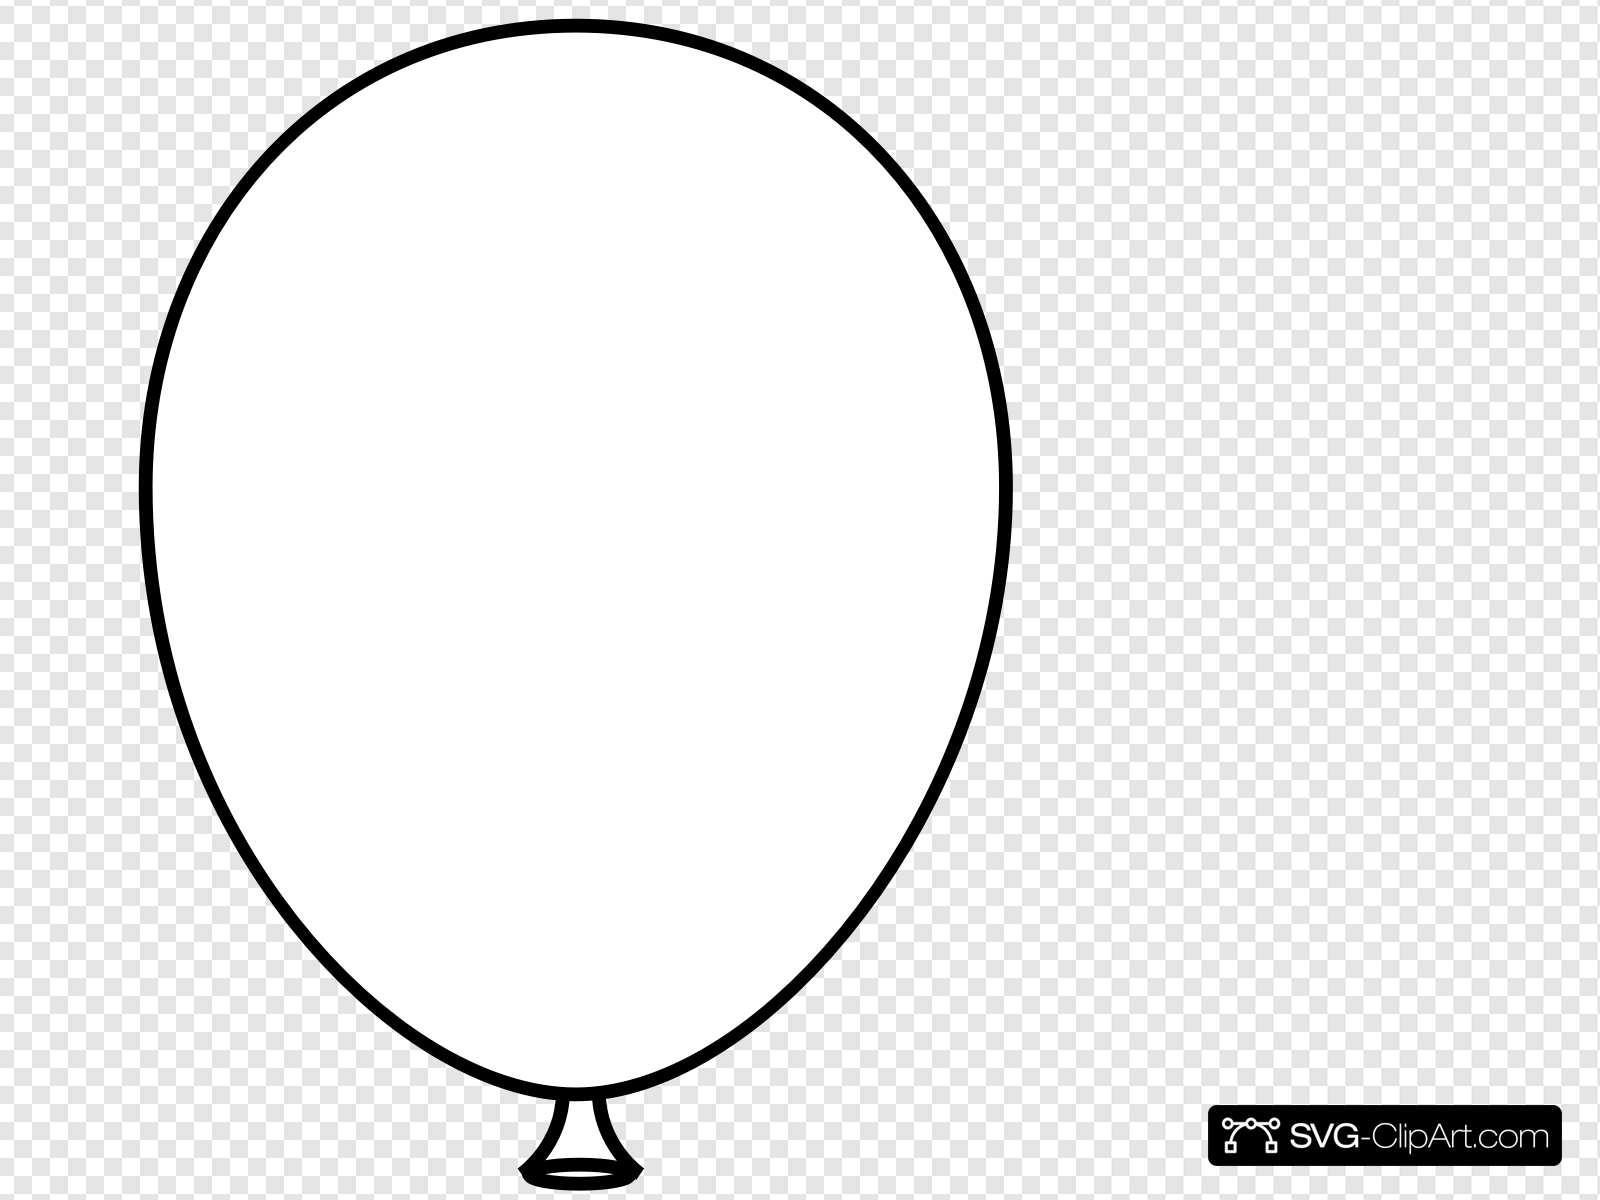 White Balloon Bold Clip art, Icon and SVG.